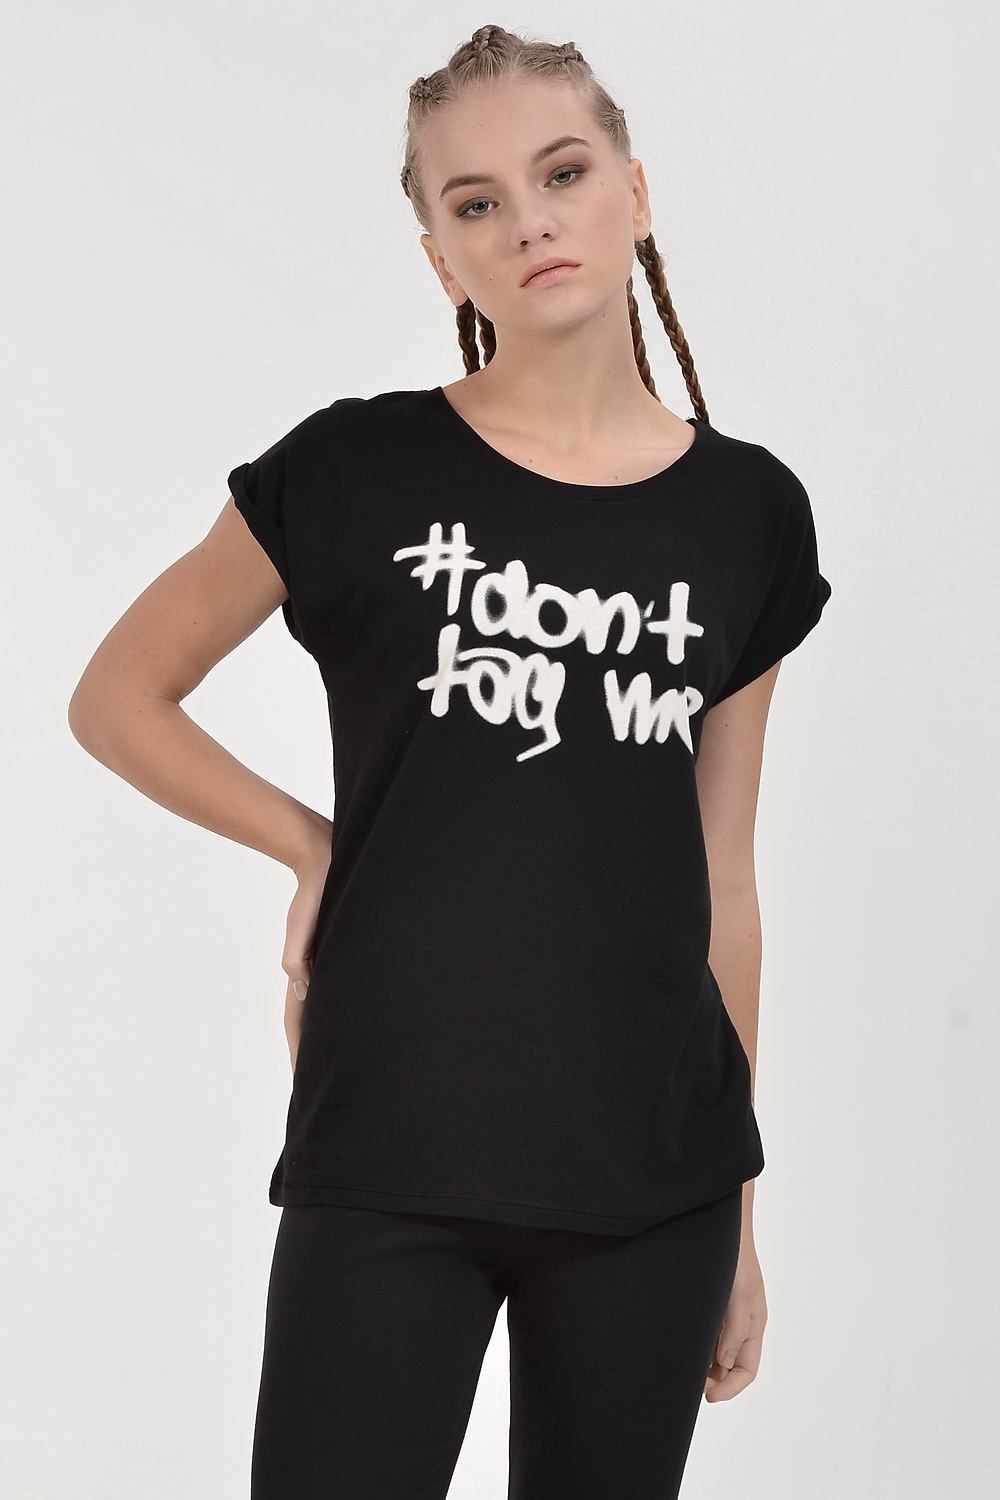 Cotton Candy #Don'T Tag Me Baskılı Kısa Kol Kadın T-Shirt - Siyah